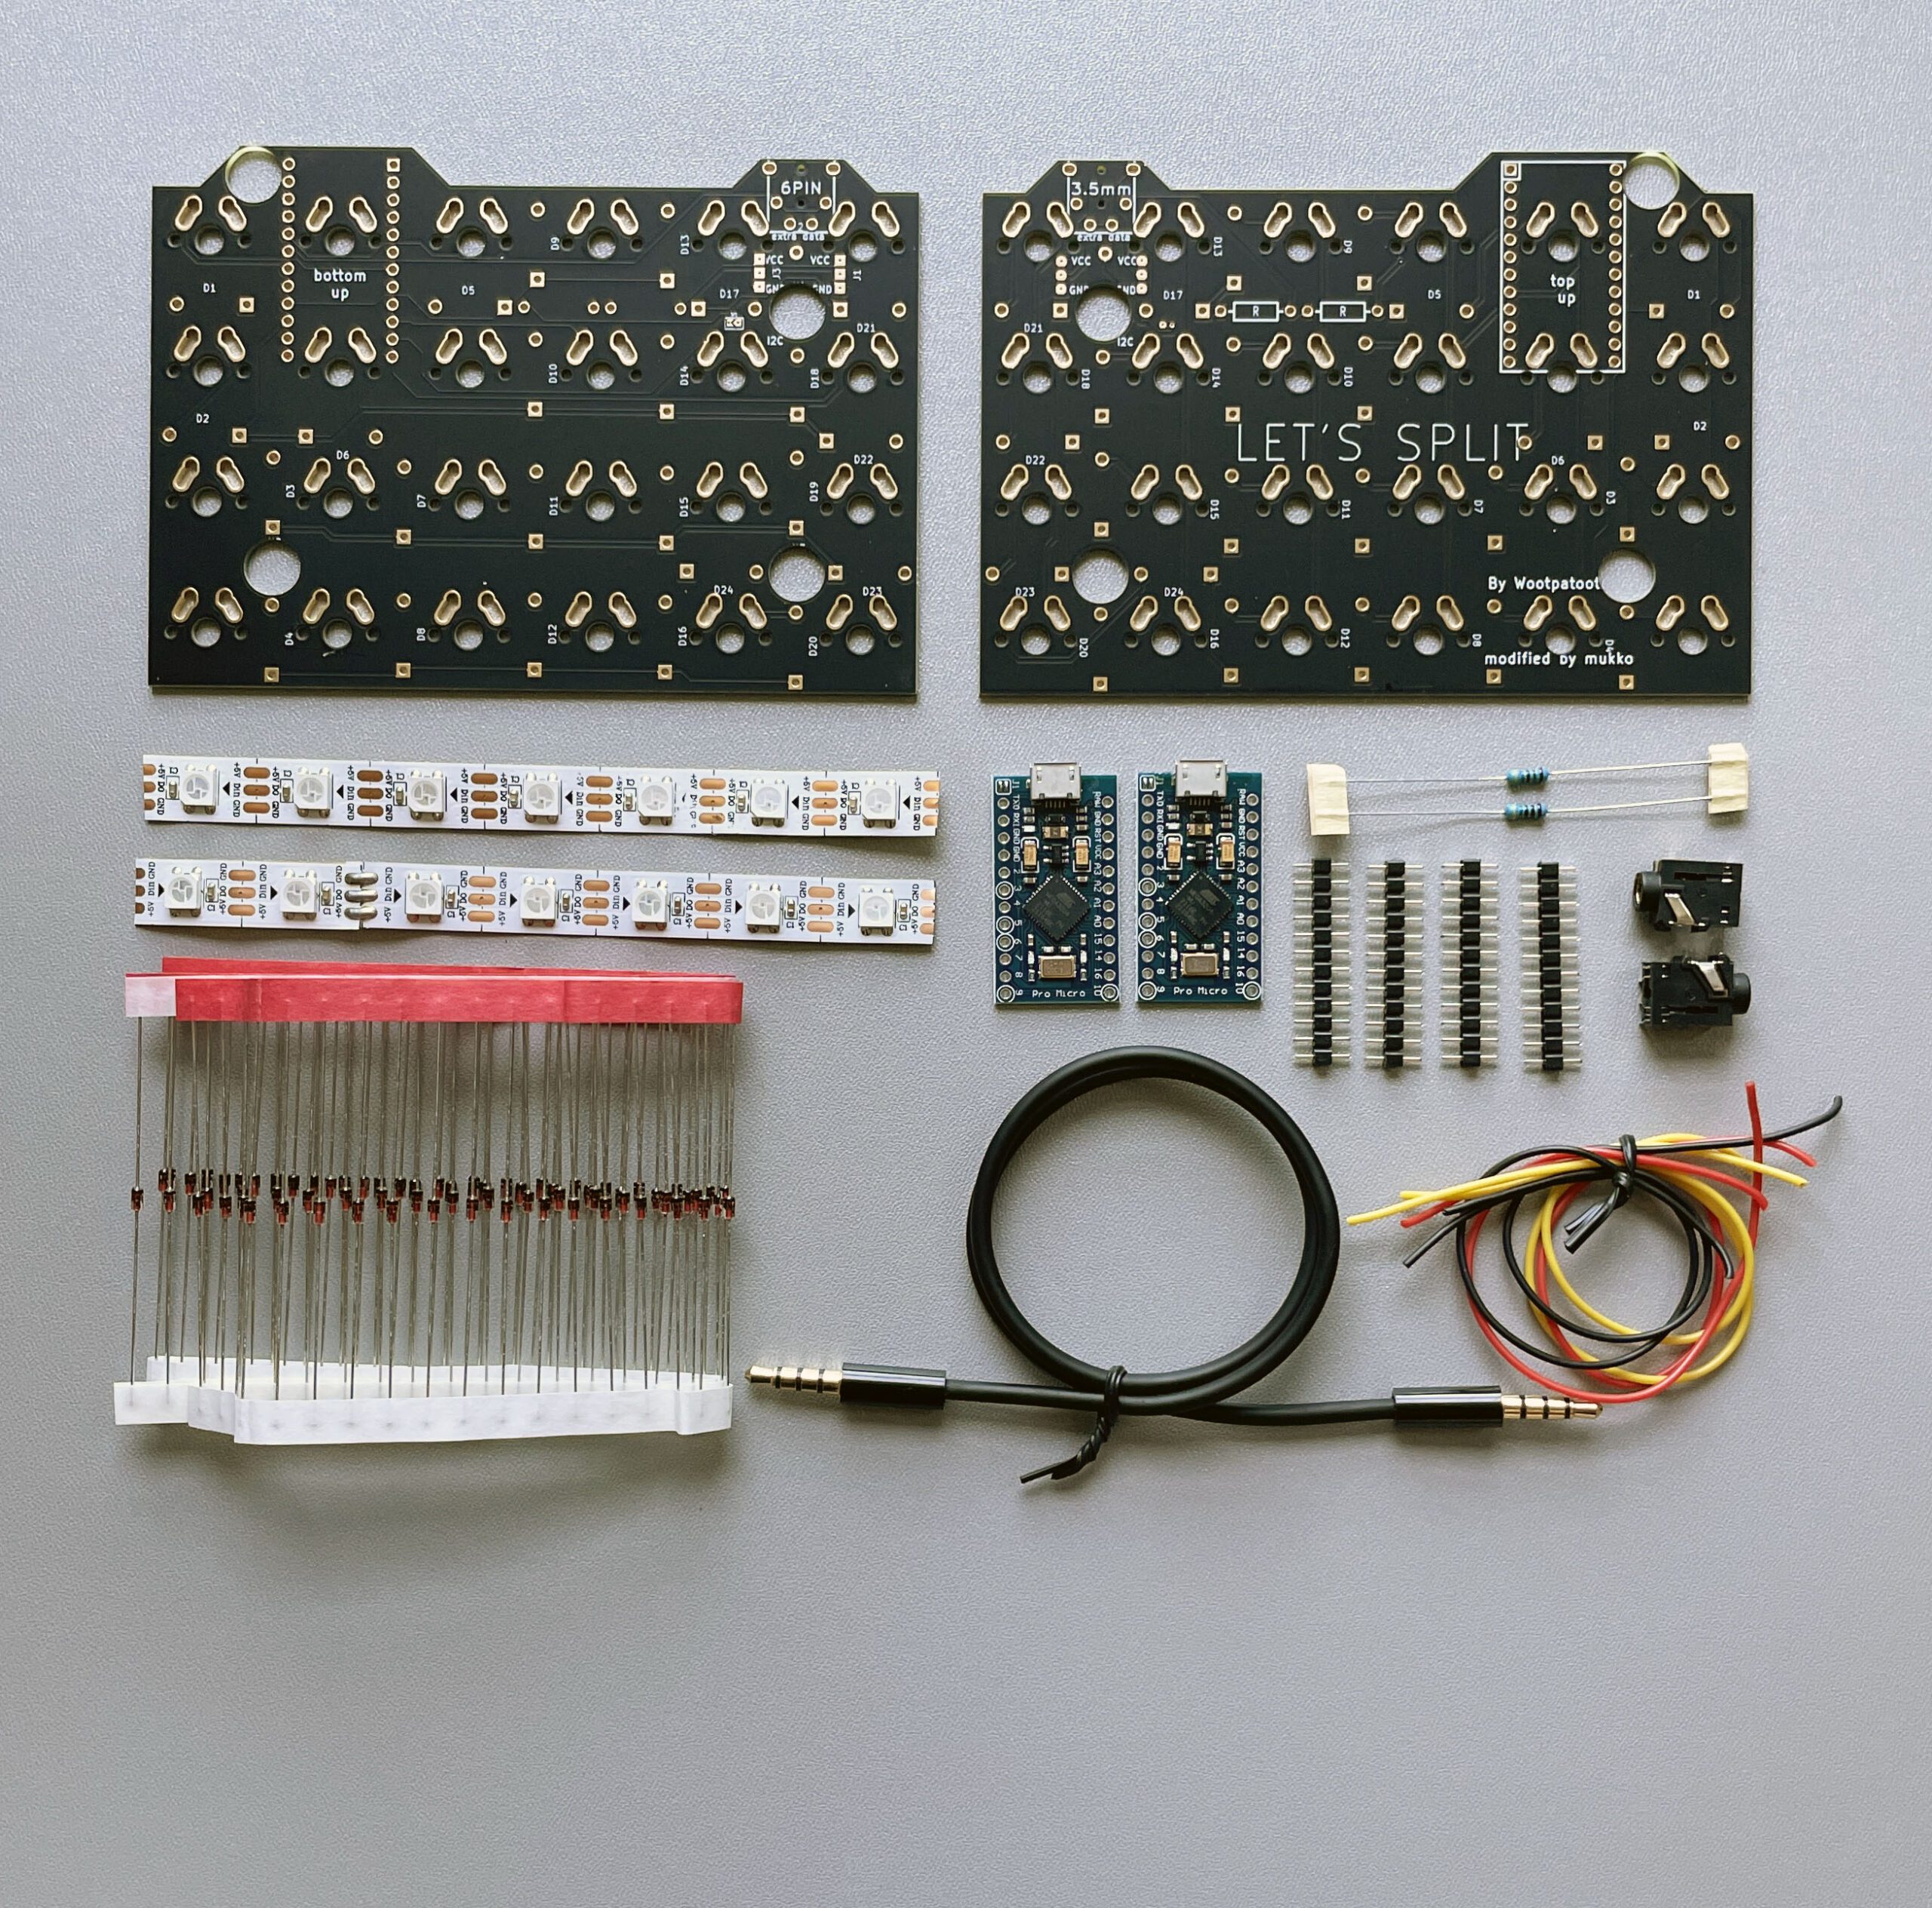 Let’s Split v2 Ortholinear Split Keyboard PCB Kit